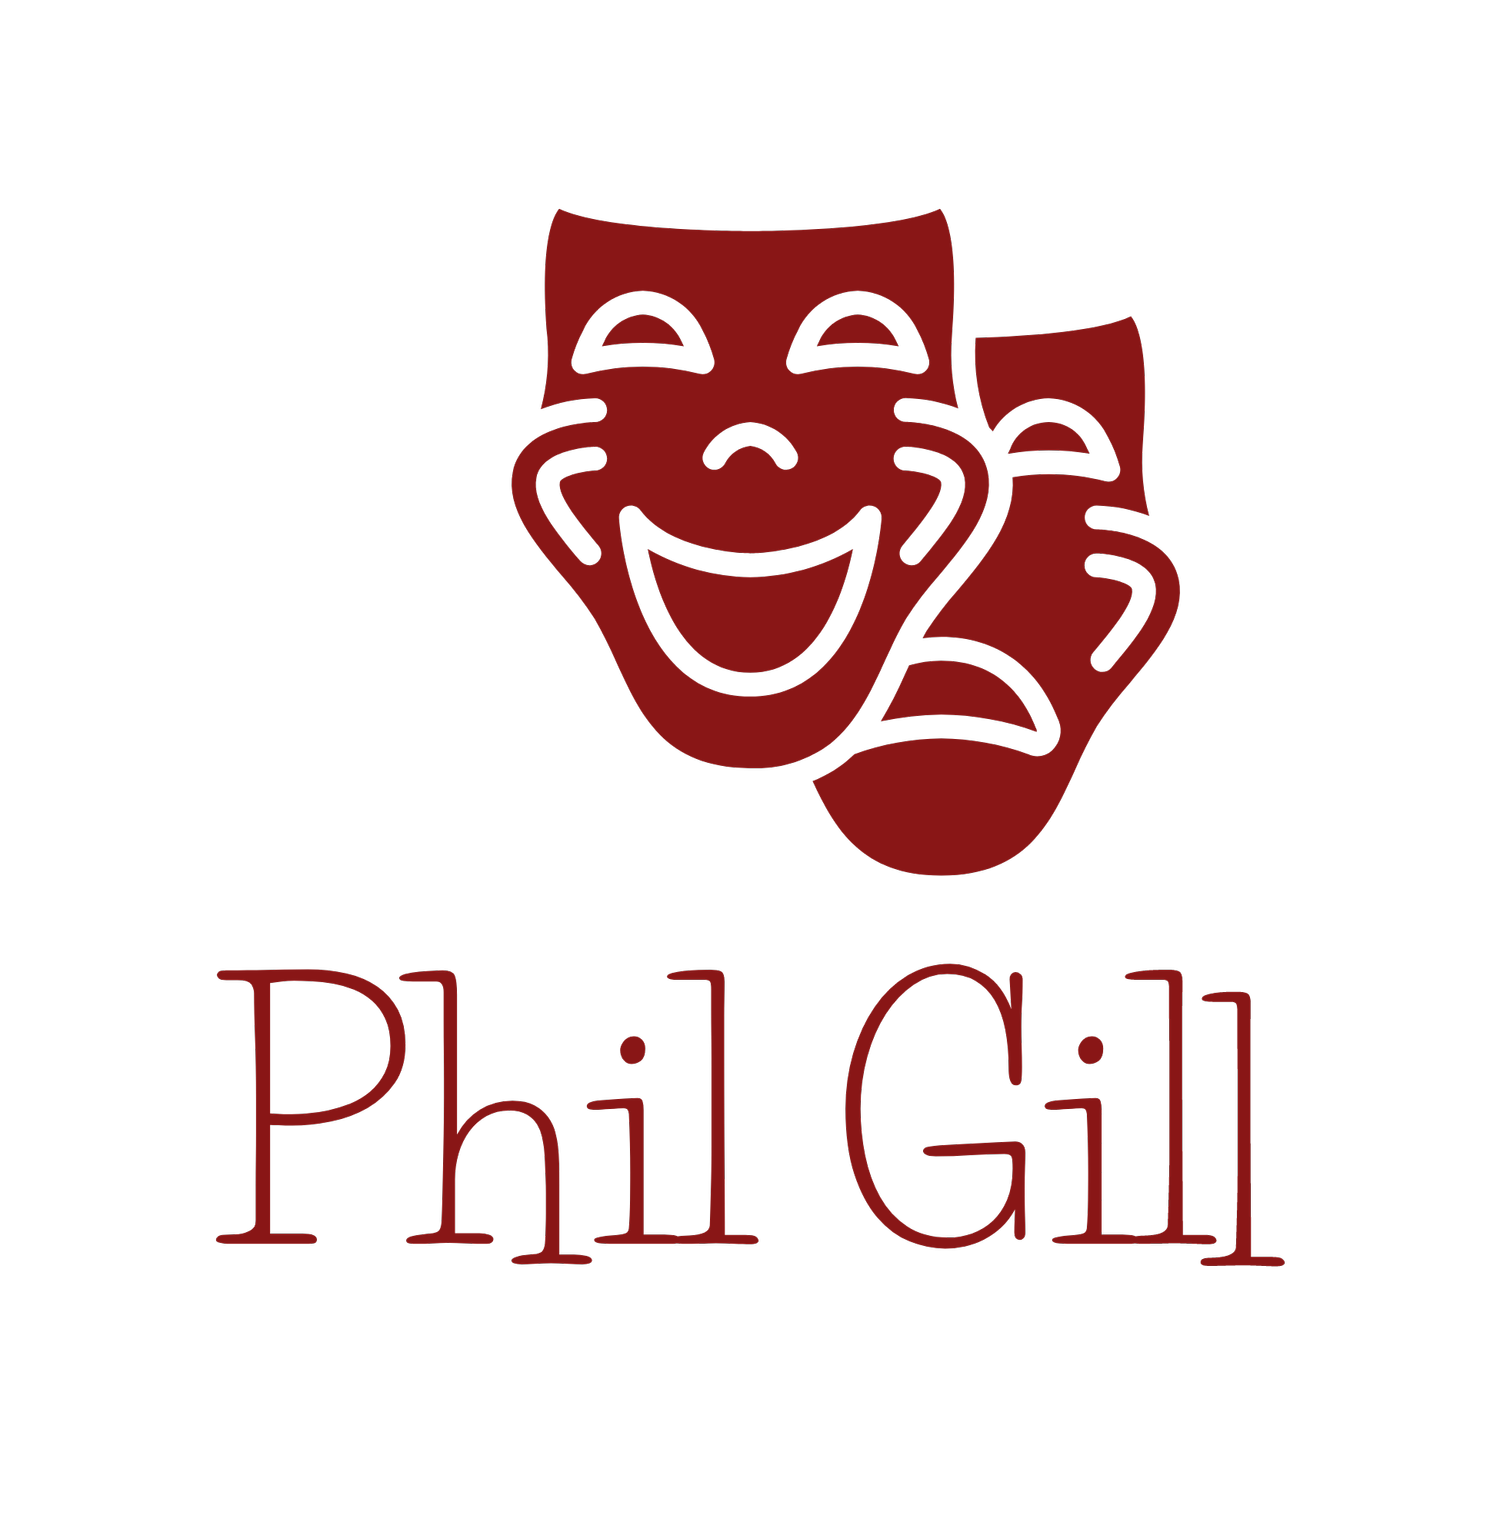 Phil Gill